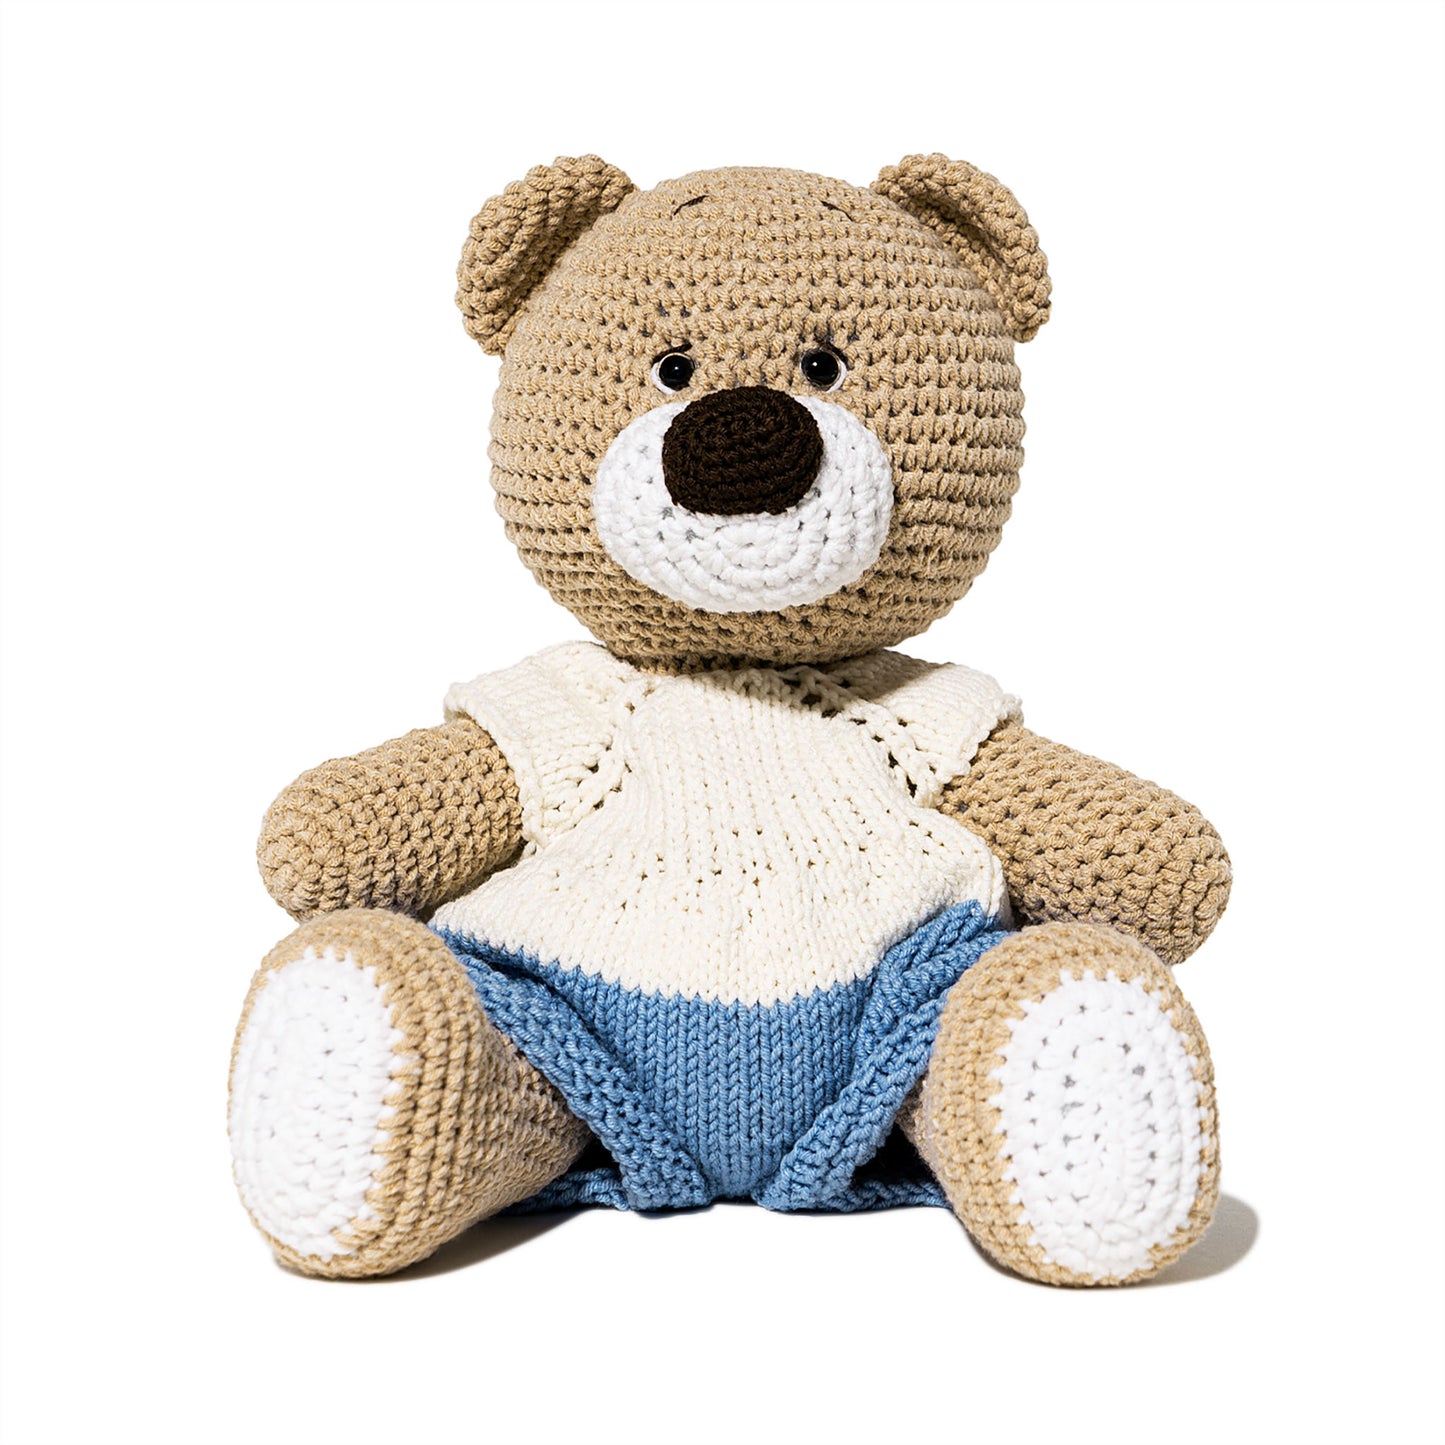 White/Blue Lulibears Archook Crochet Teddy Bears. Handmade stuffed animal, puppy, knit by hand.